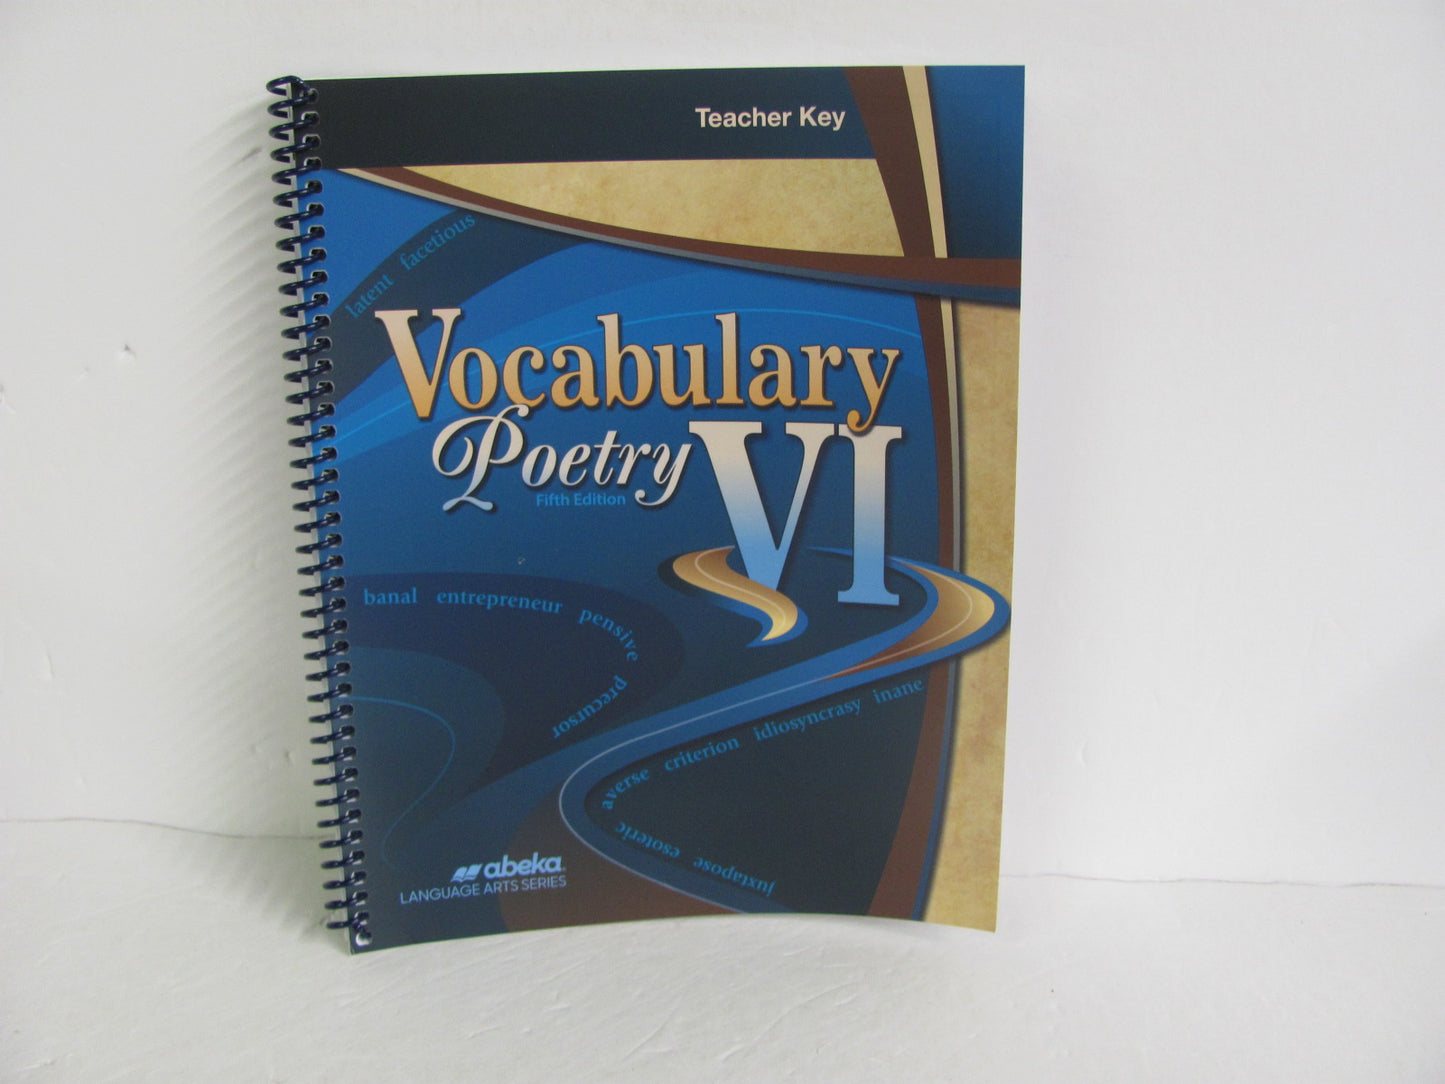 Vocabulary Poetry VI Abeka Teacher Key  Pre-Owned Spelling/Vocabulary Books